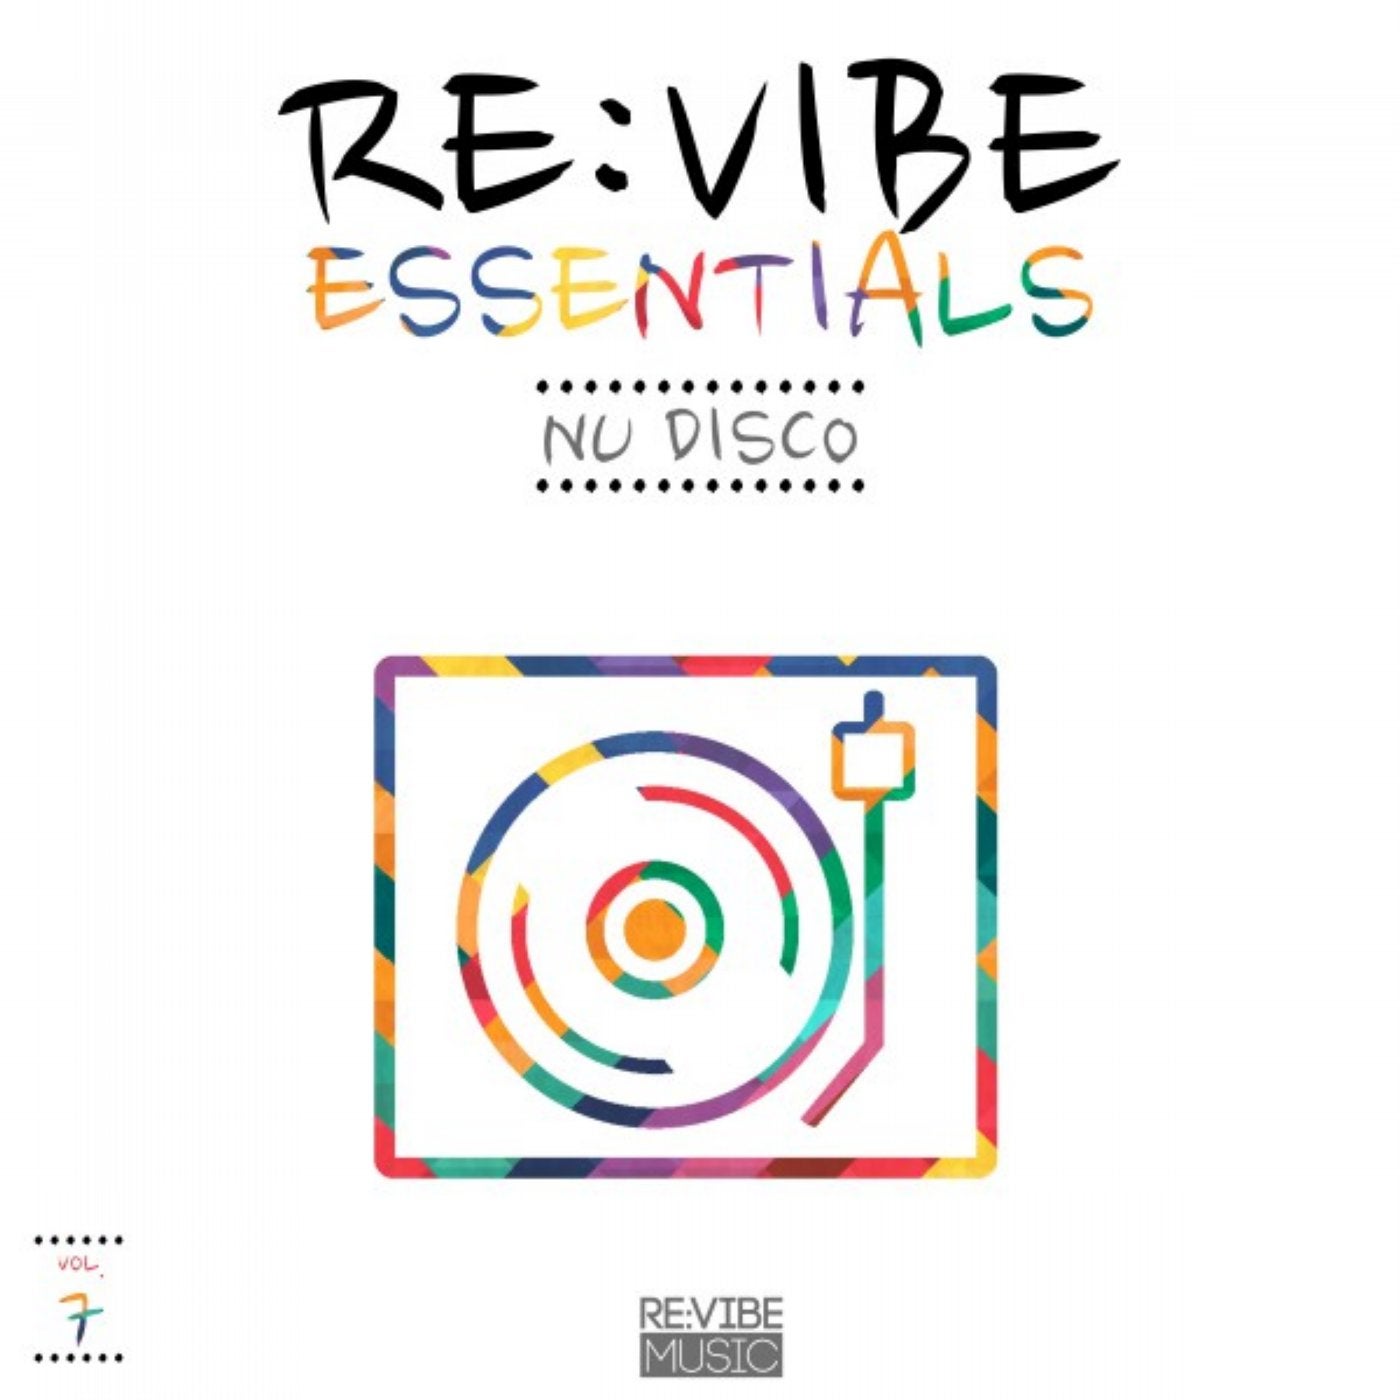 Re:Vibe Essentials - Nu Disco, Vol. 7